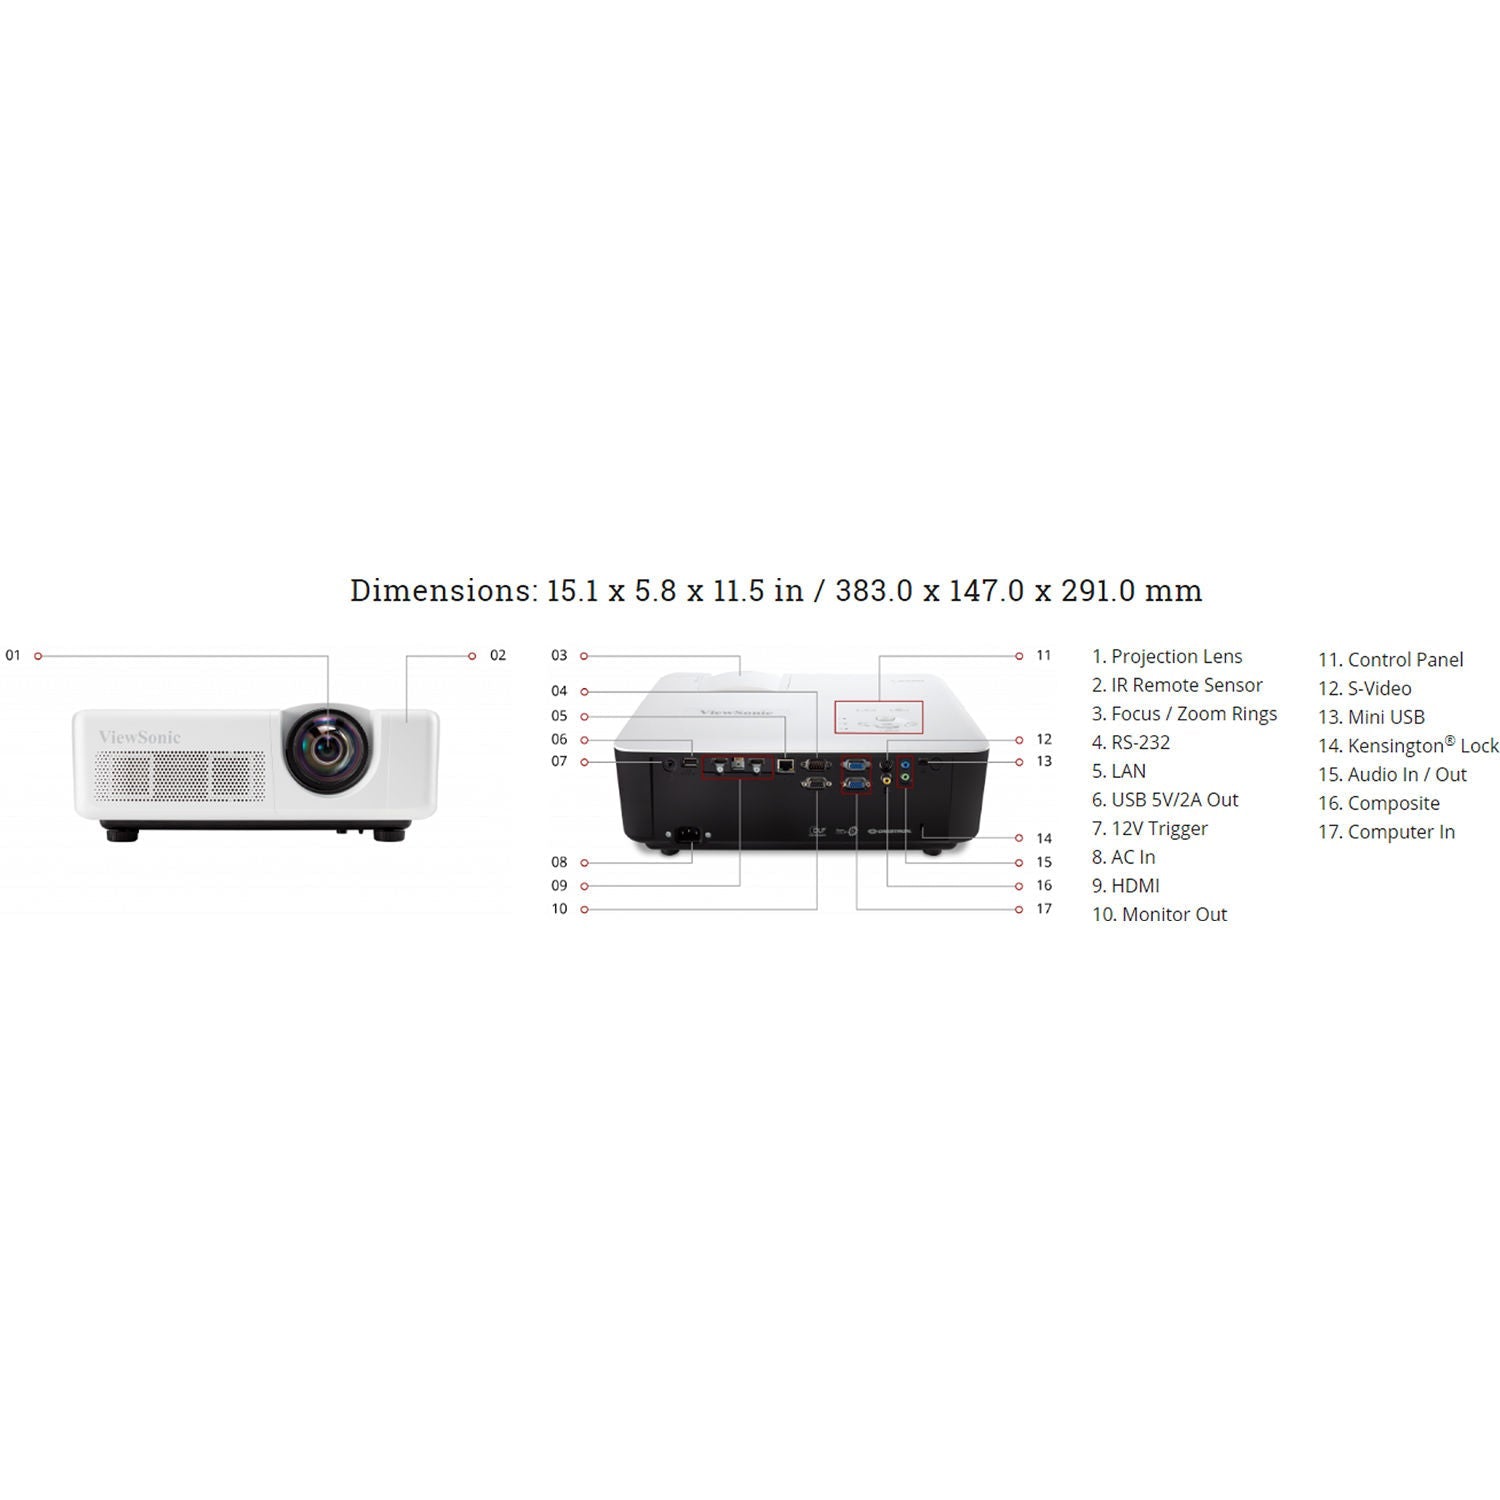 ViewSonic LS625W-S 3200-Lumen WXGA Laser DLP Projector - Certified Refurbished